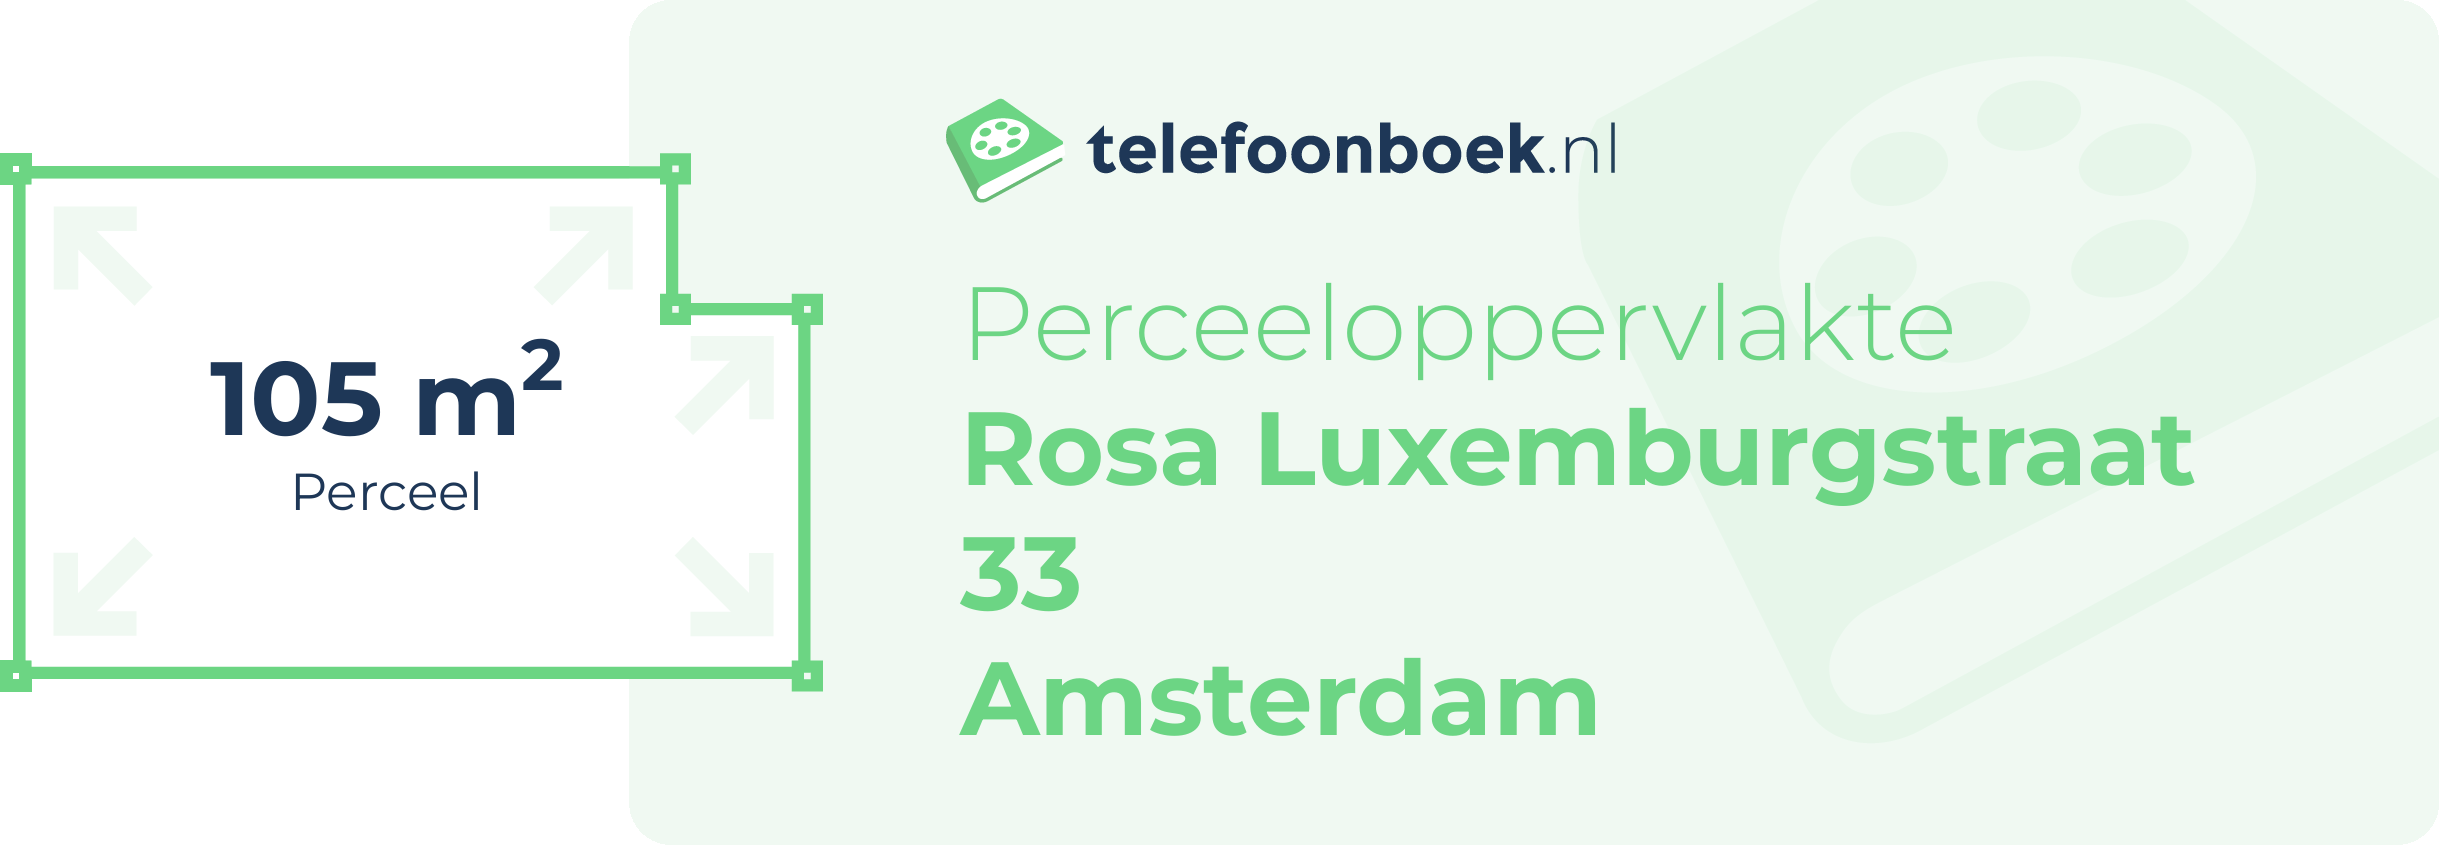 Perceeloppervlakte Rosa Luxemburgstraat 33 Amsterdam